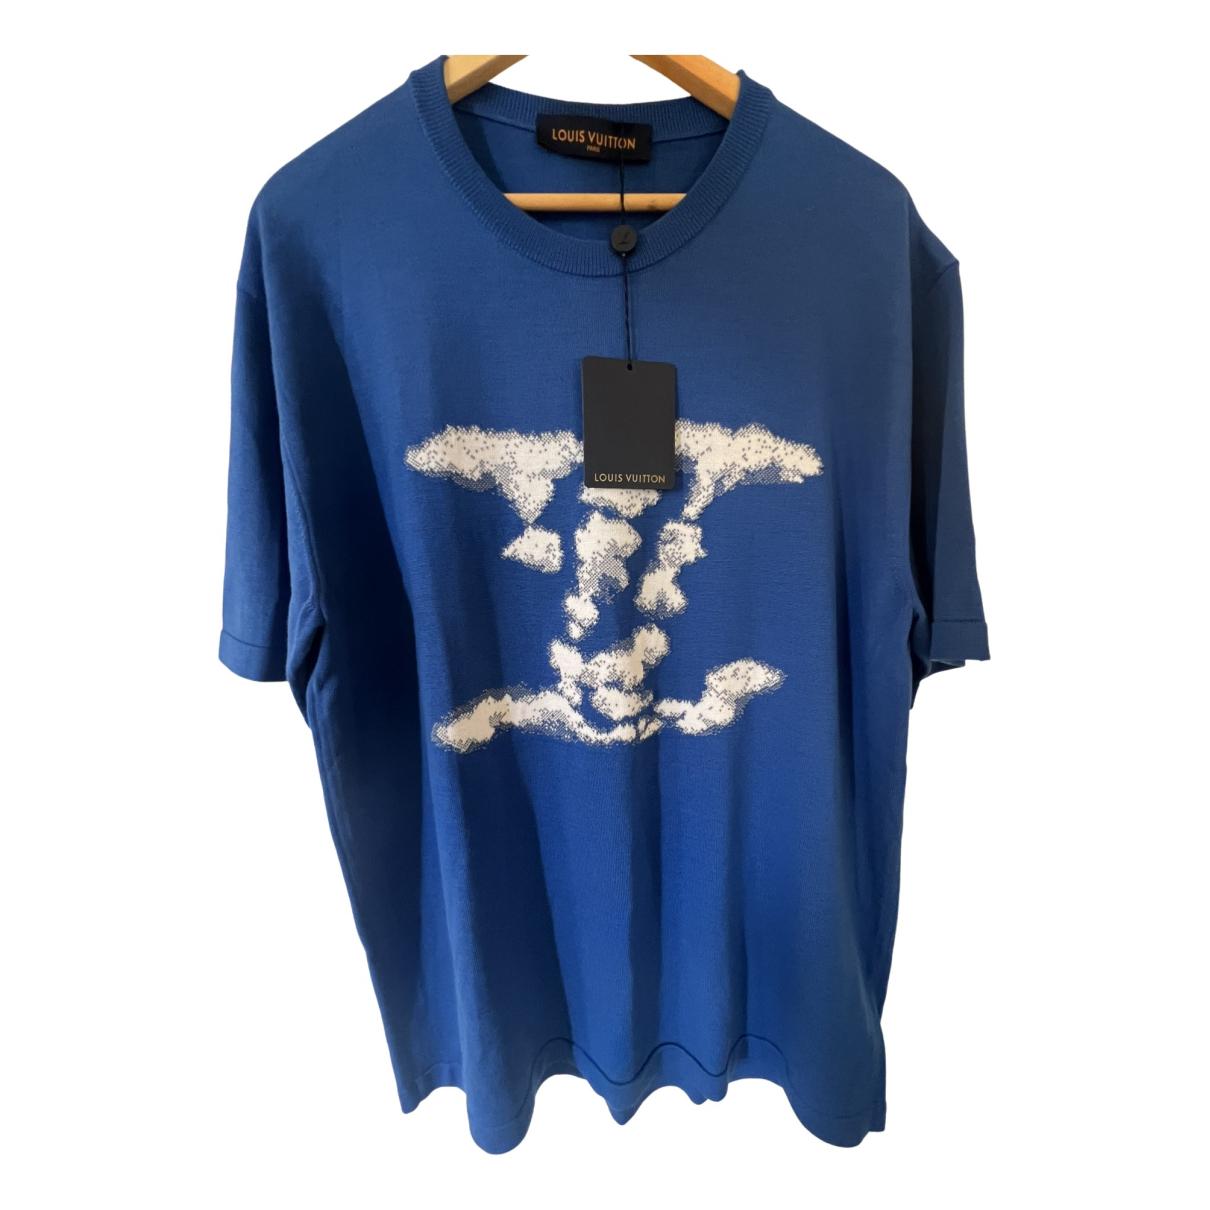 T-shirt Louis Vuitton Blue size XXL International in Cotton - 29406304